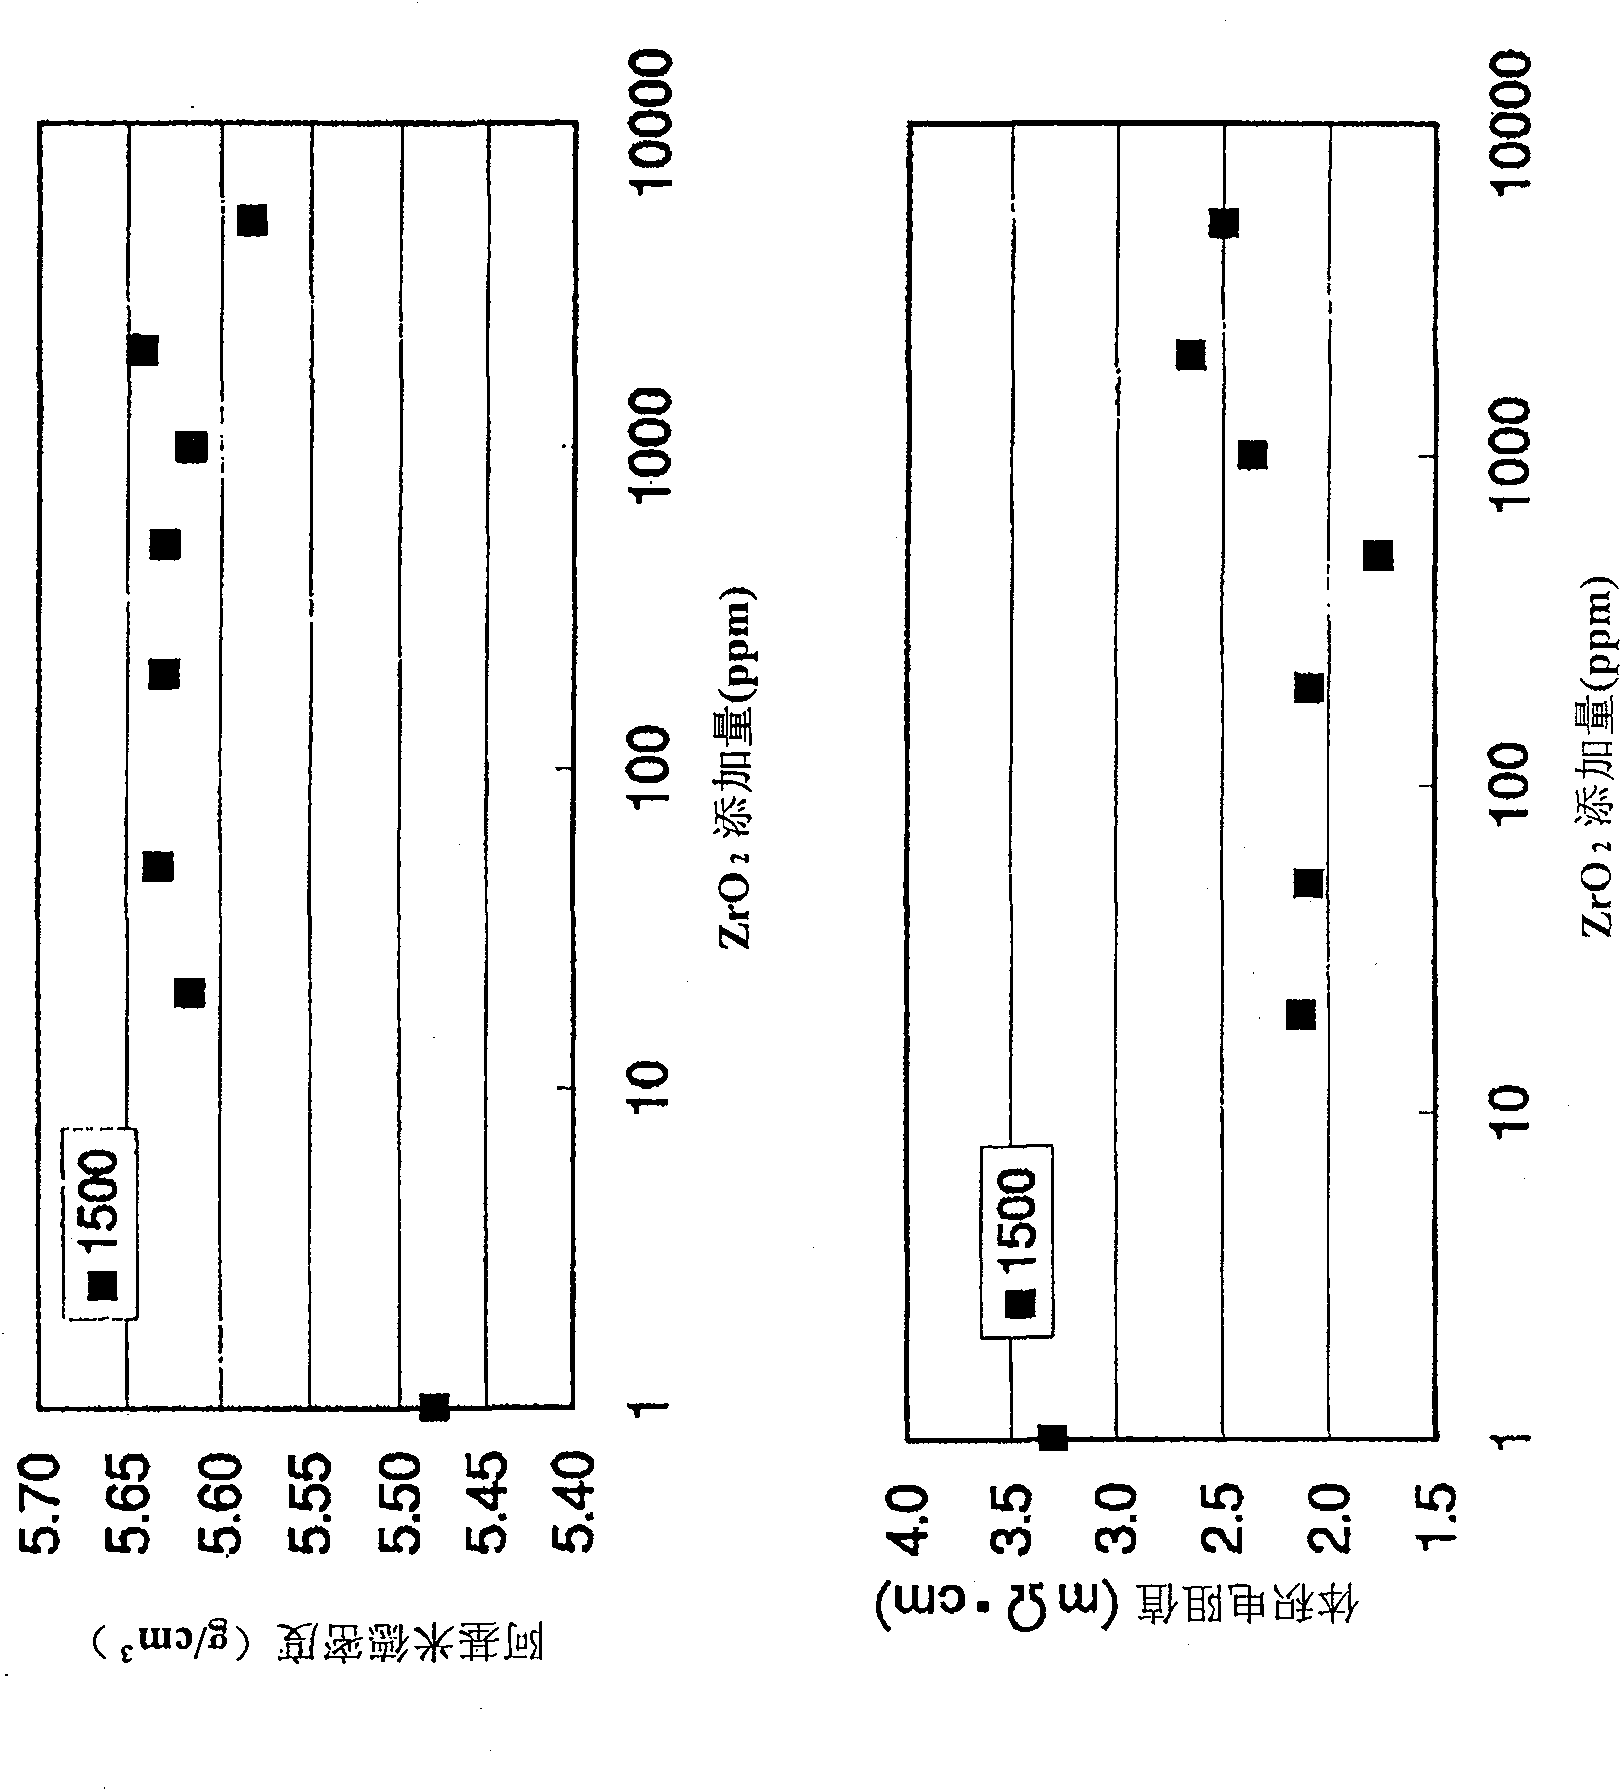 Gallium oxide-zinc oxide sputtering target, method for forming transparent conductive film, and transparent conductive film